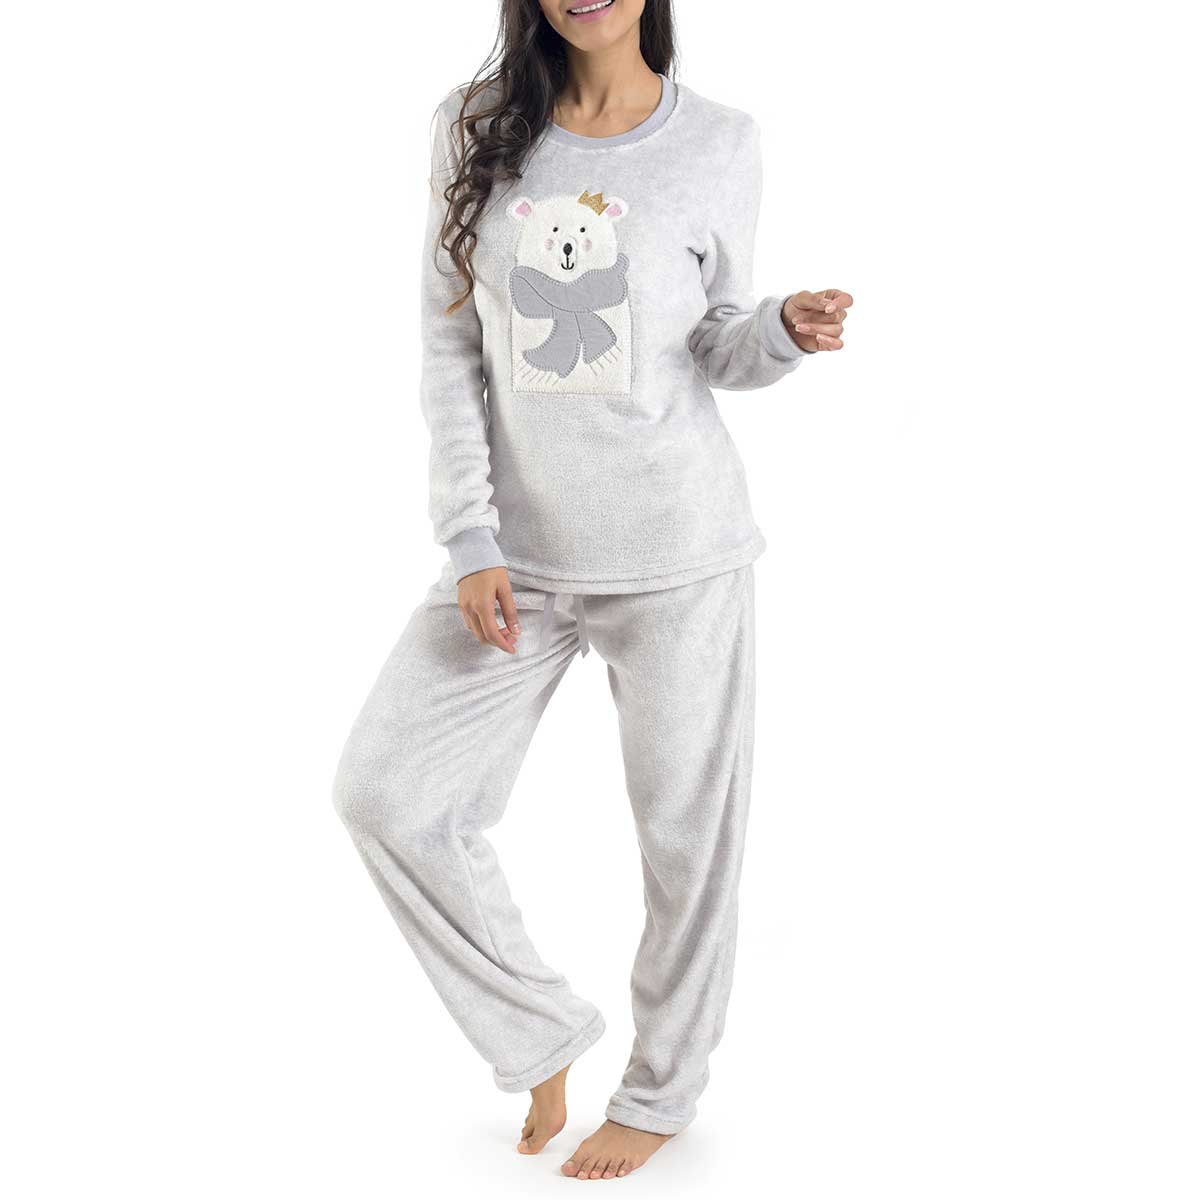 Pijama Flannel Lisa con Oso al Frente la Nuit